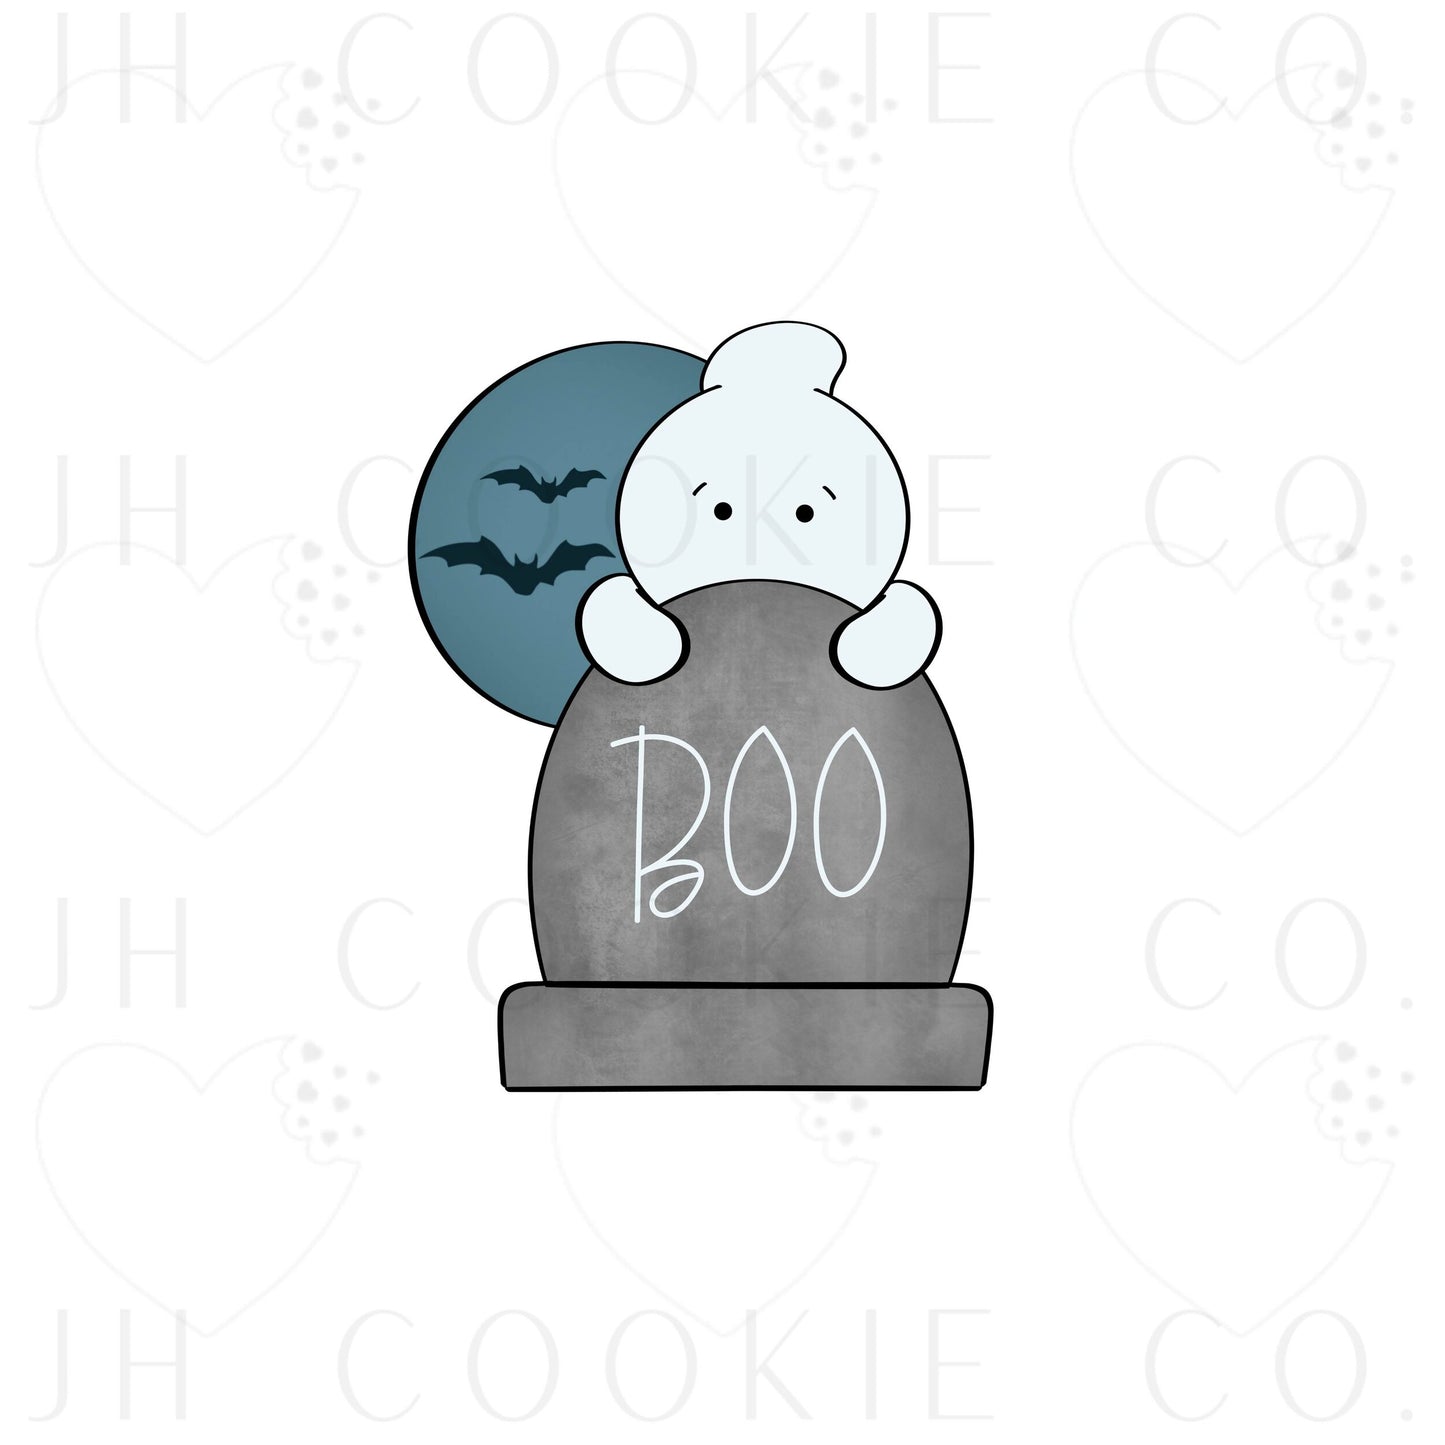 Boo Ghost 2021 - Cookie Cutter